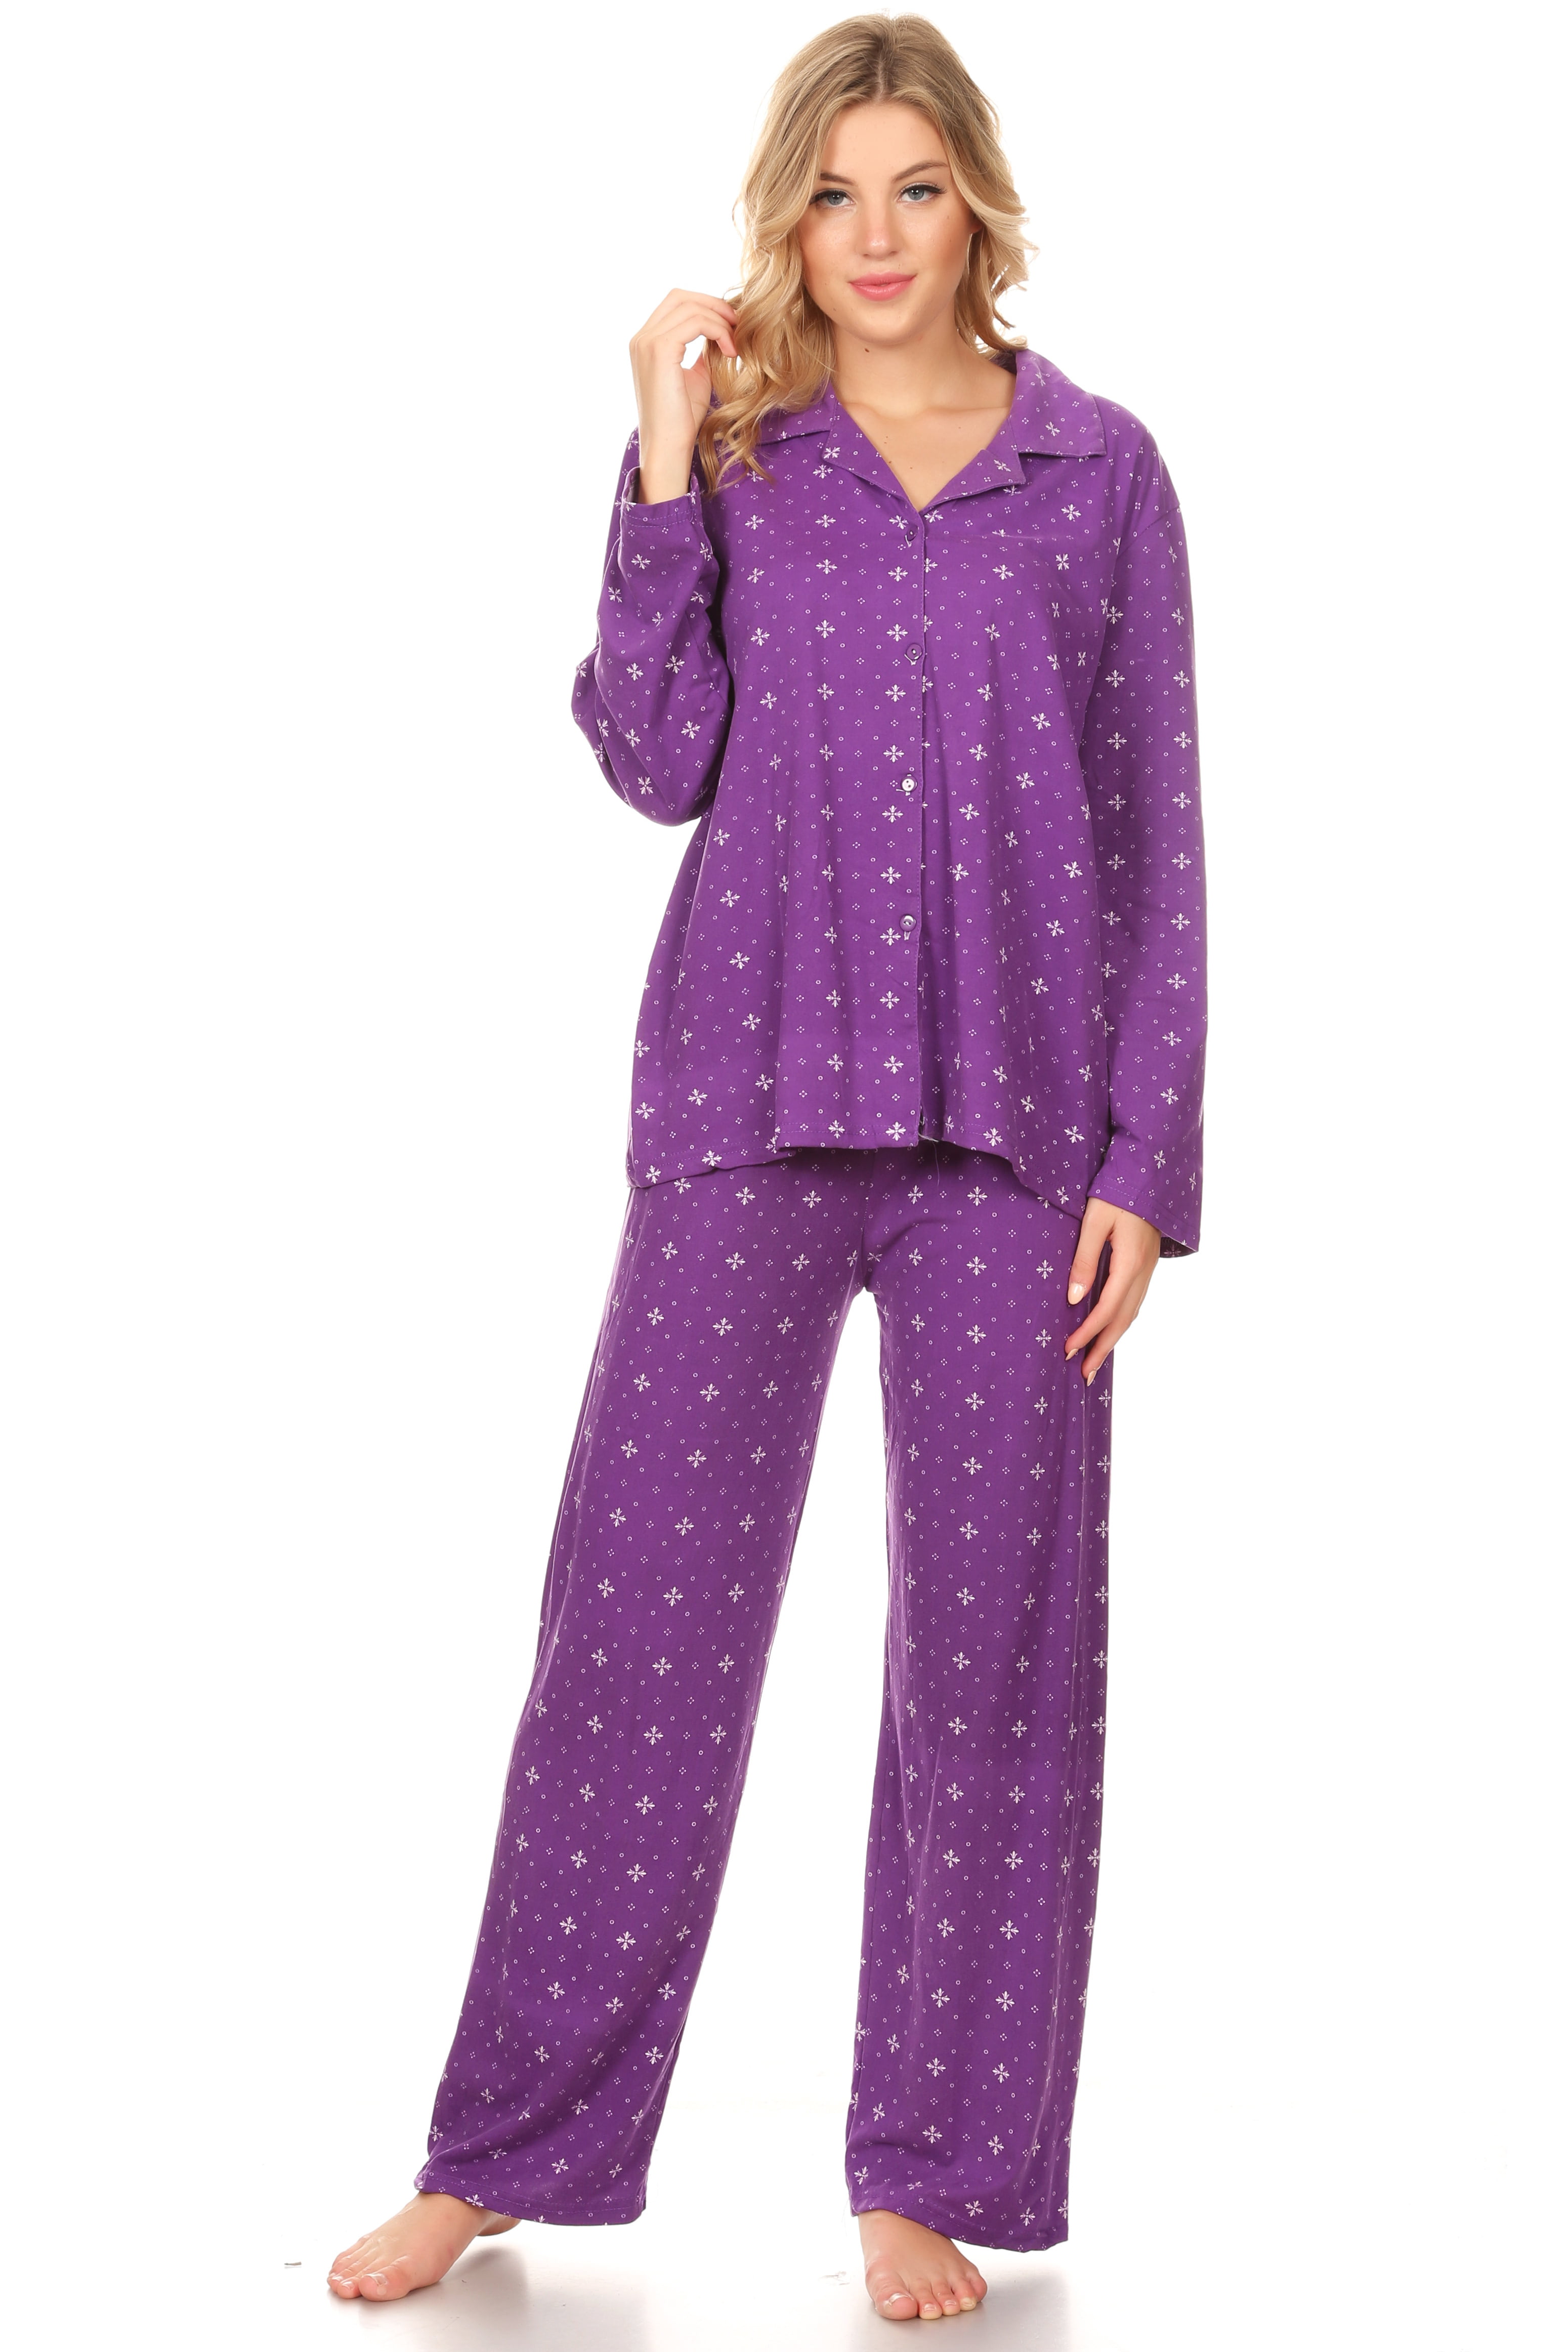 Z2152 Womens Sleepwear Pajamas Woman Long Sleeve Button Down set Purple ...